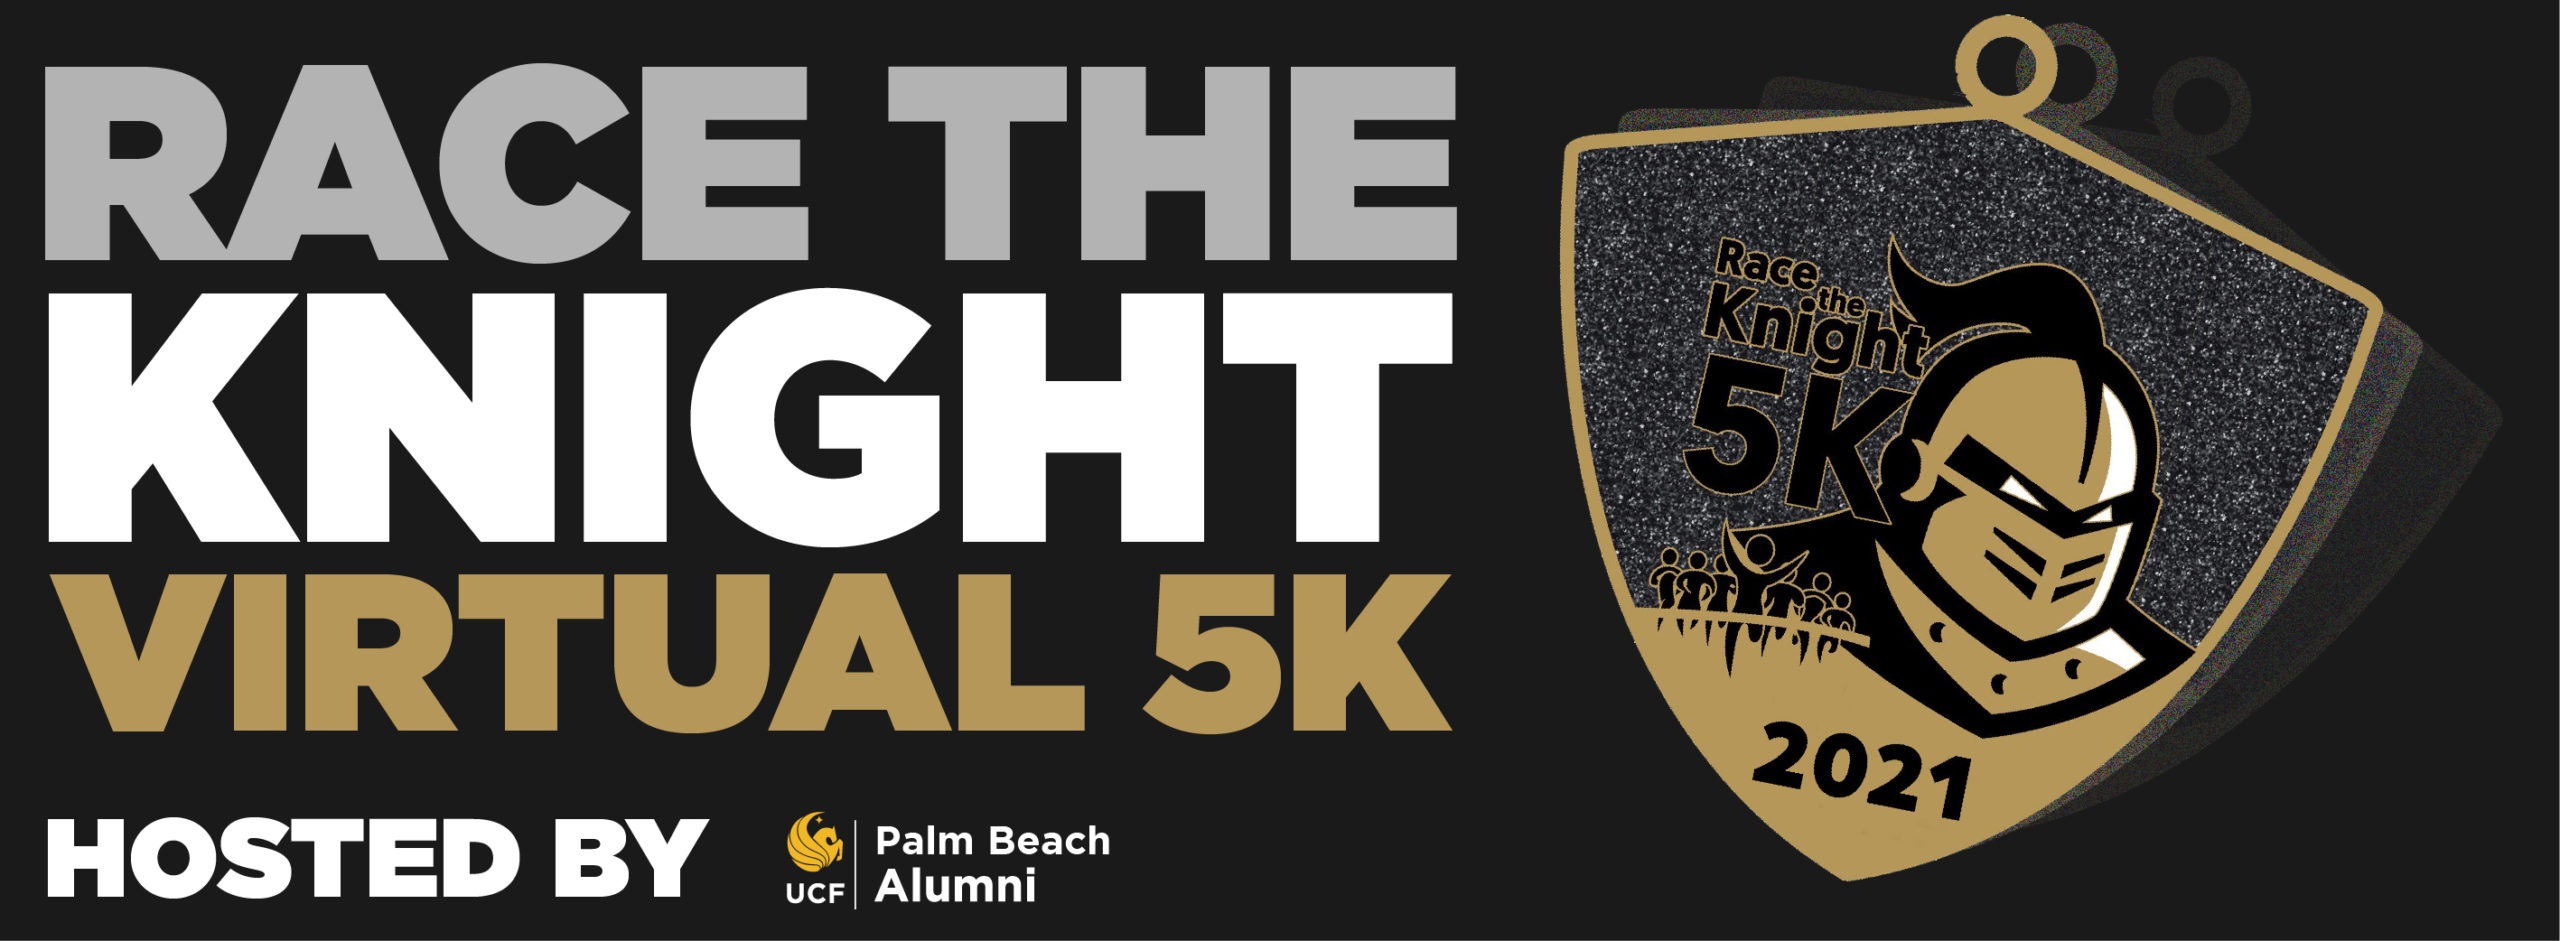 Race the Knight 5K (virtual) logo on RaceRaves